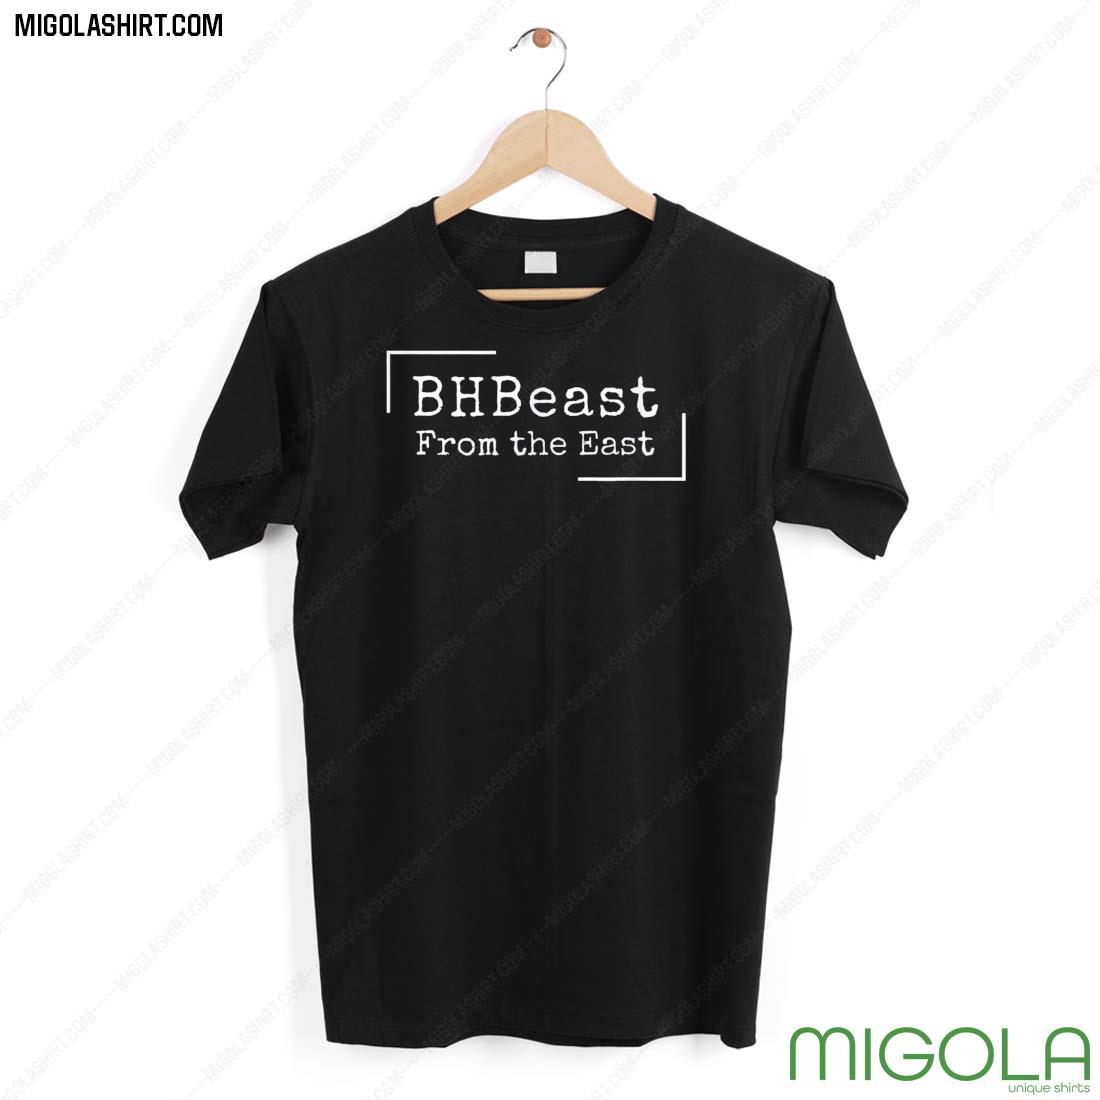 BHB East Coast – Premium Brand Merch Shirt